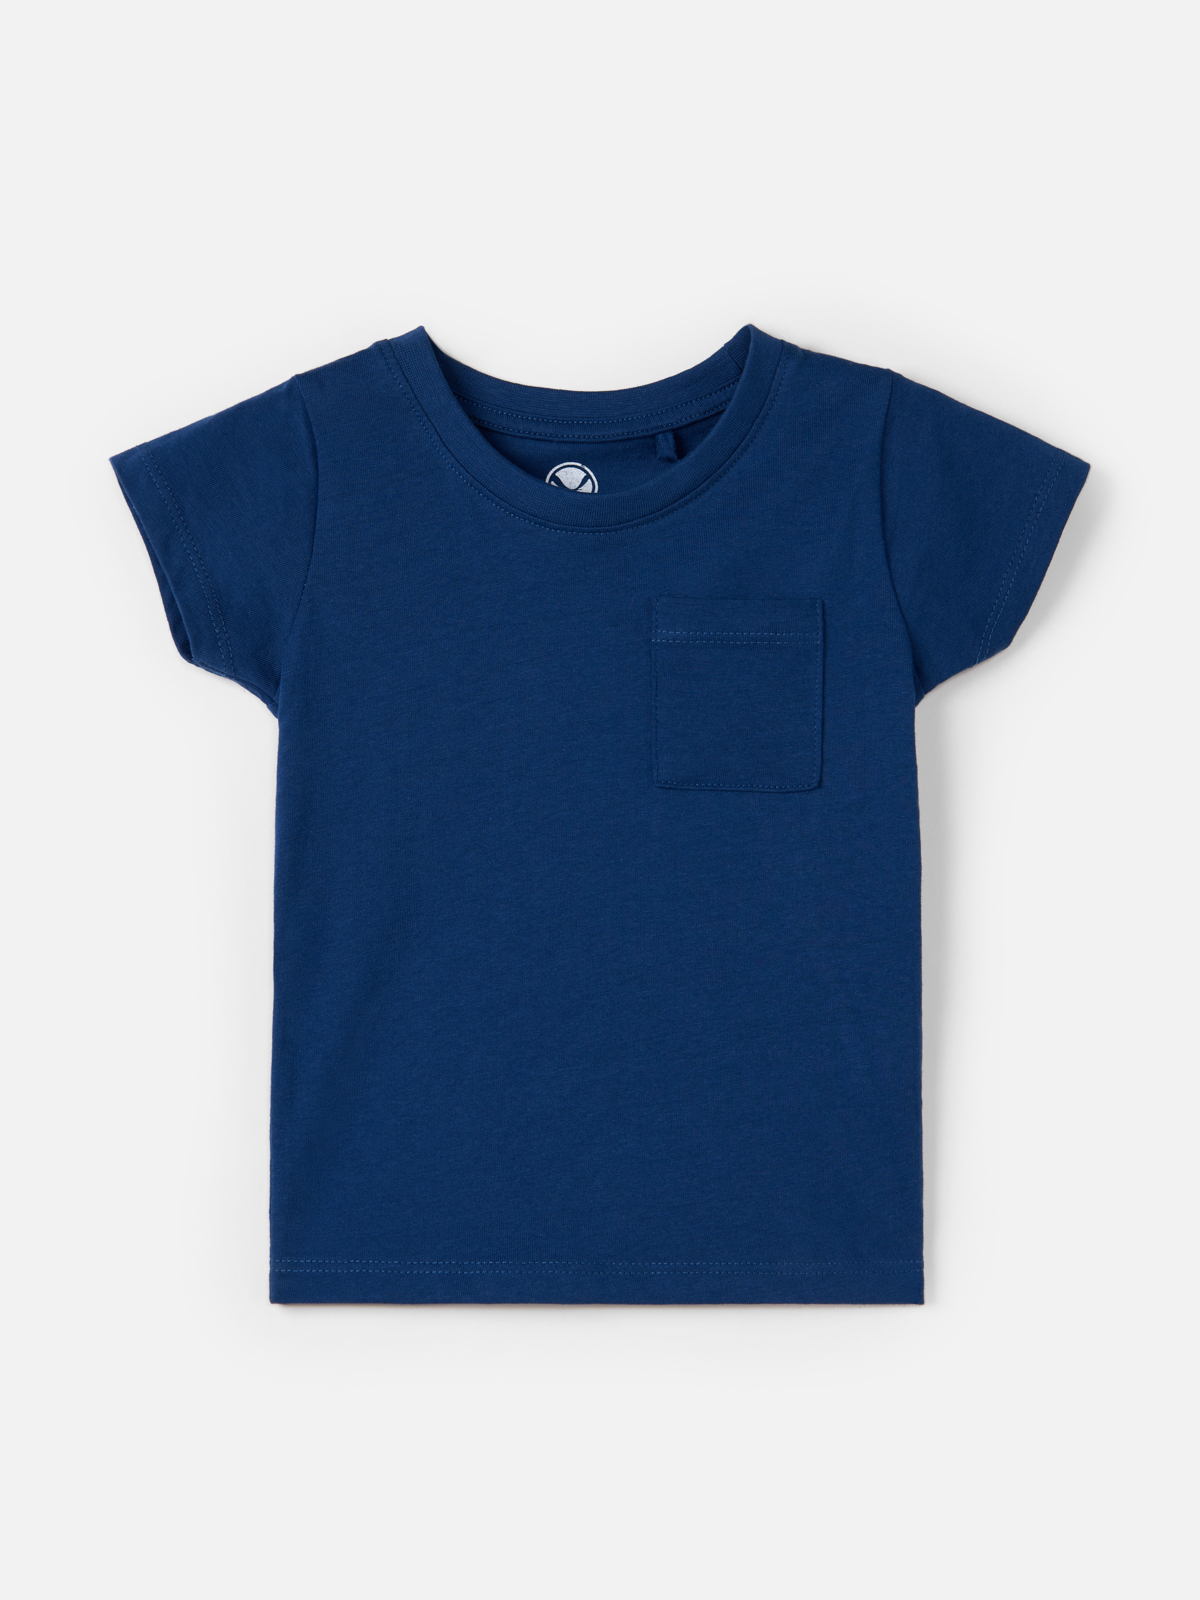 Футболка Harc Fashion для мальчиков, размер 122, HTC2306-001-Navy Blue футболка оверсайз с коротким рукавом оранжевая button blue 110